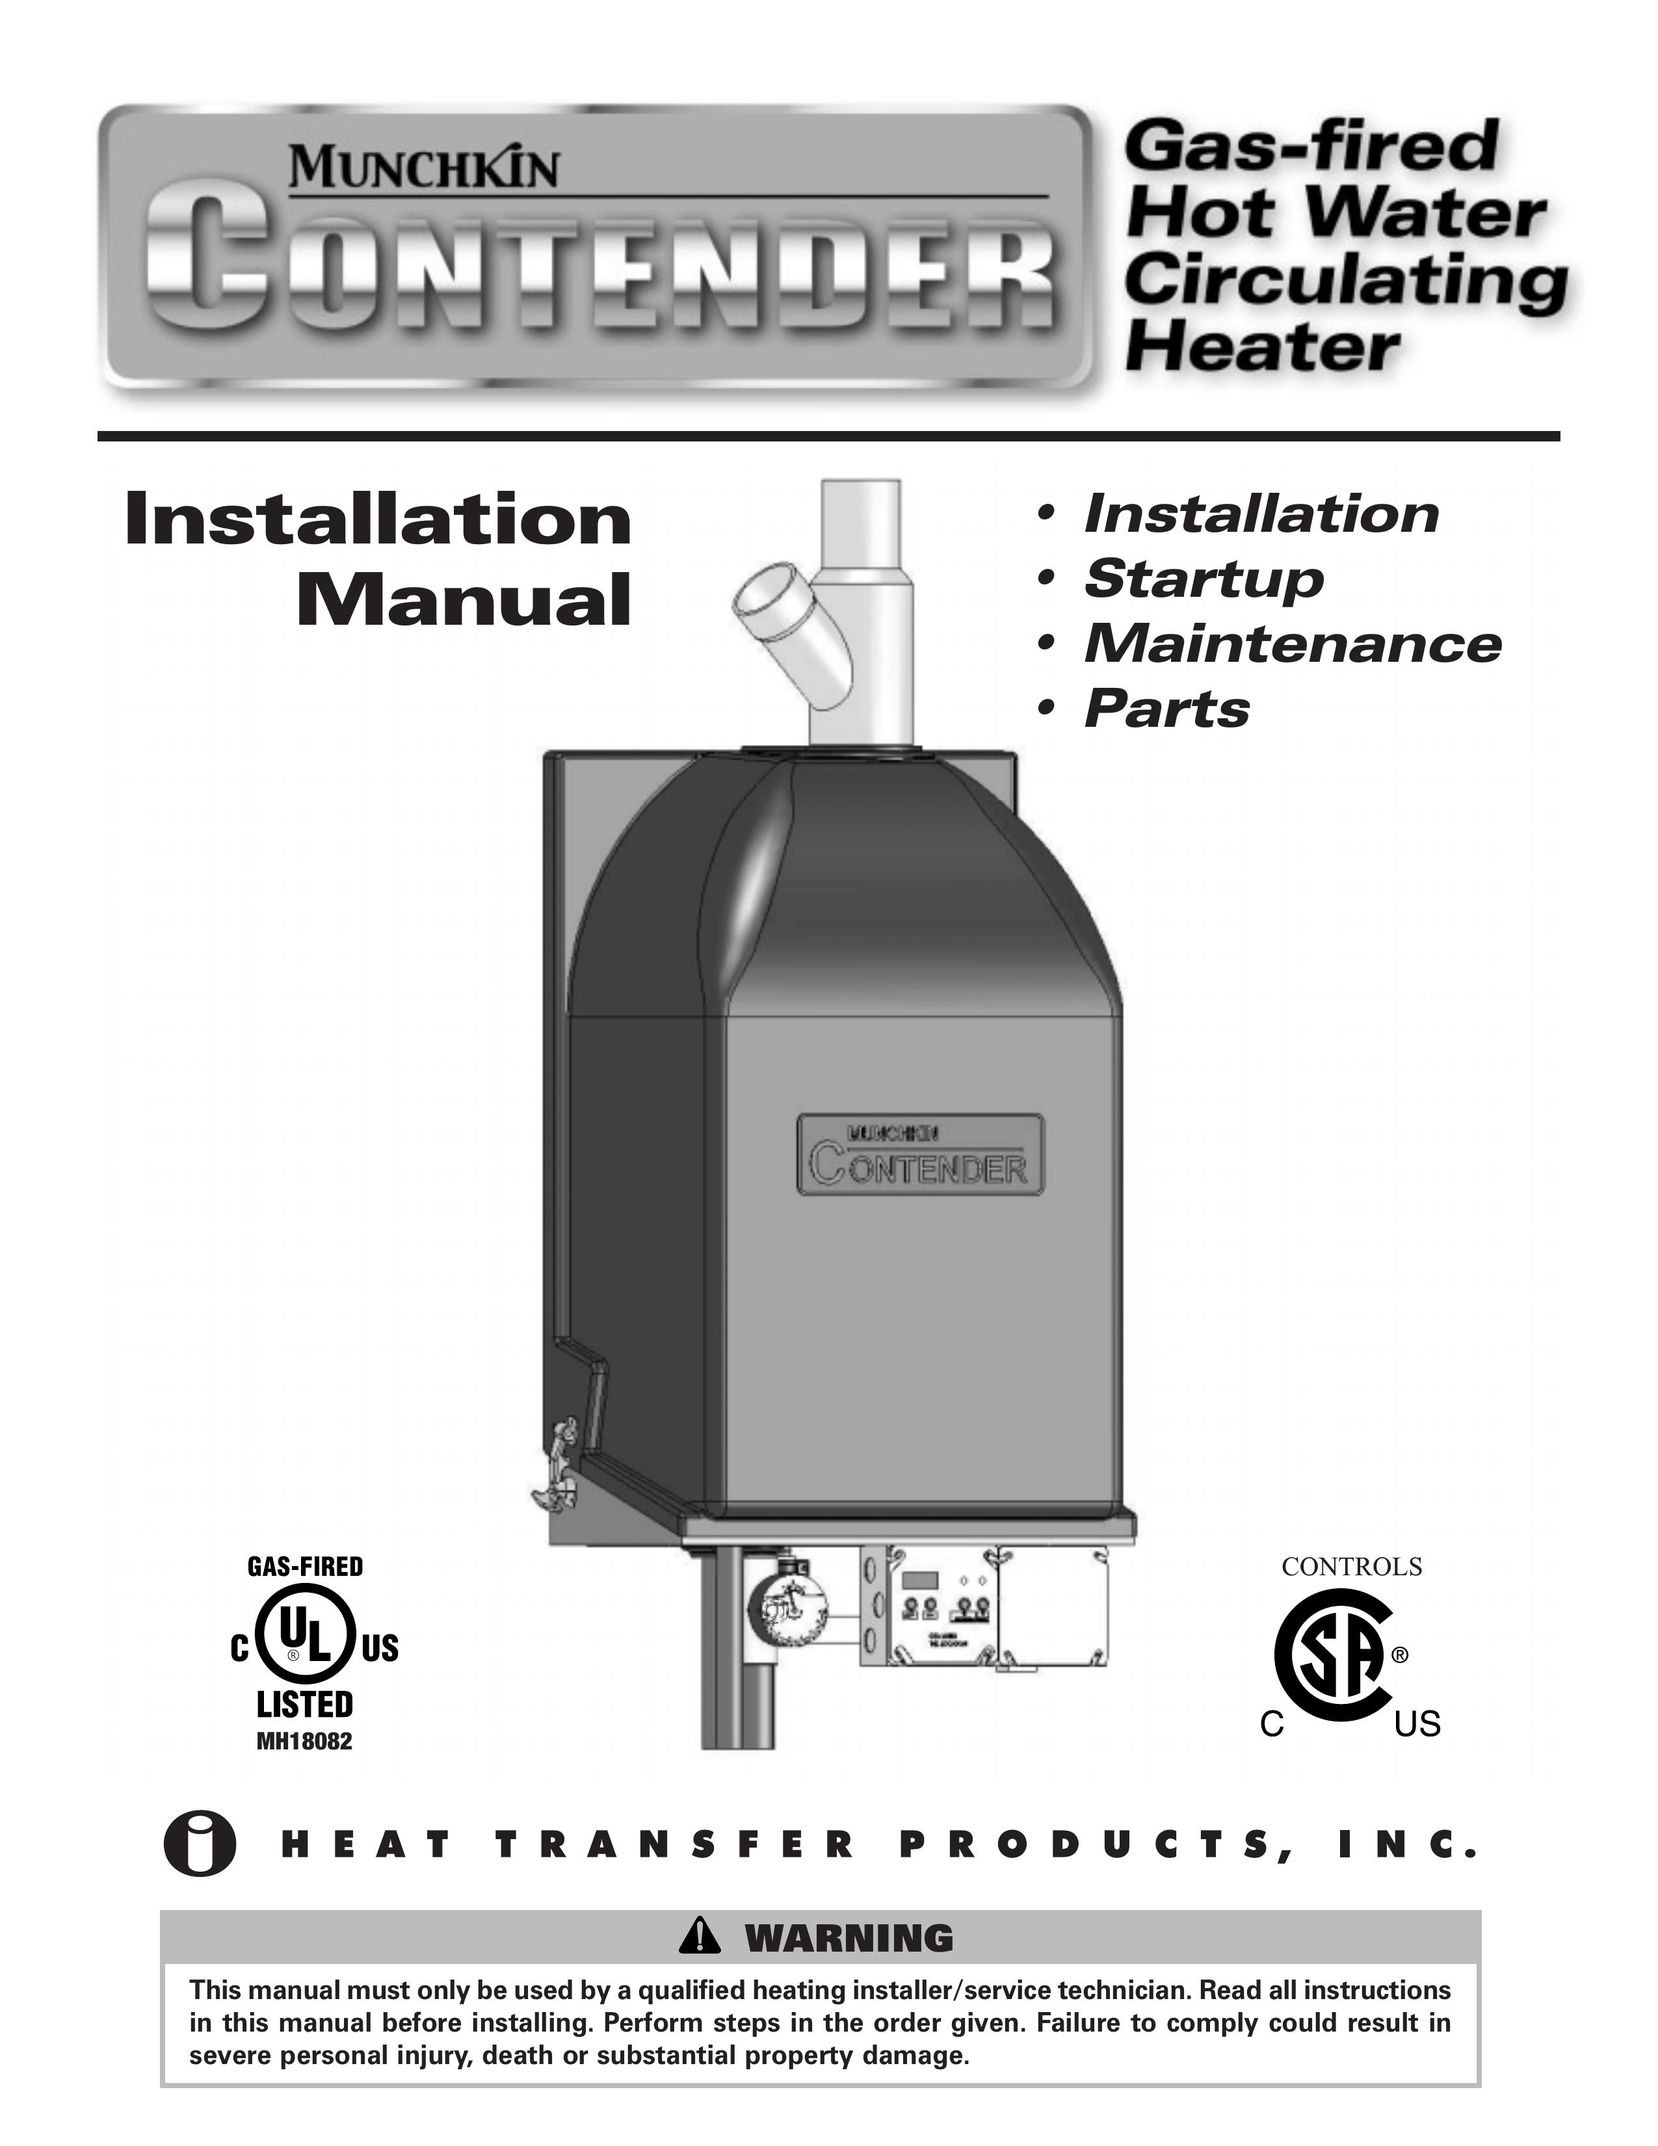 Munchkin Gas-Fired Hot Water Circulating Heater Boiler User Manual